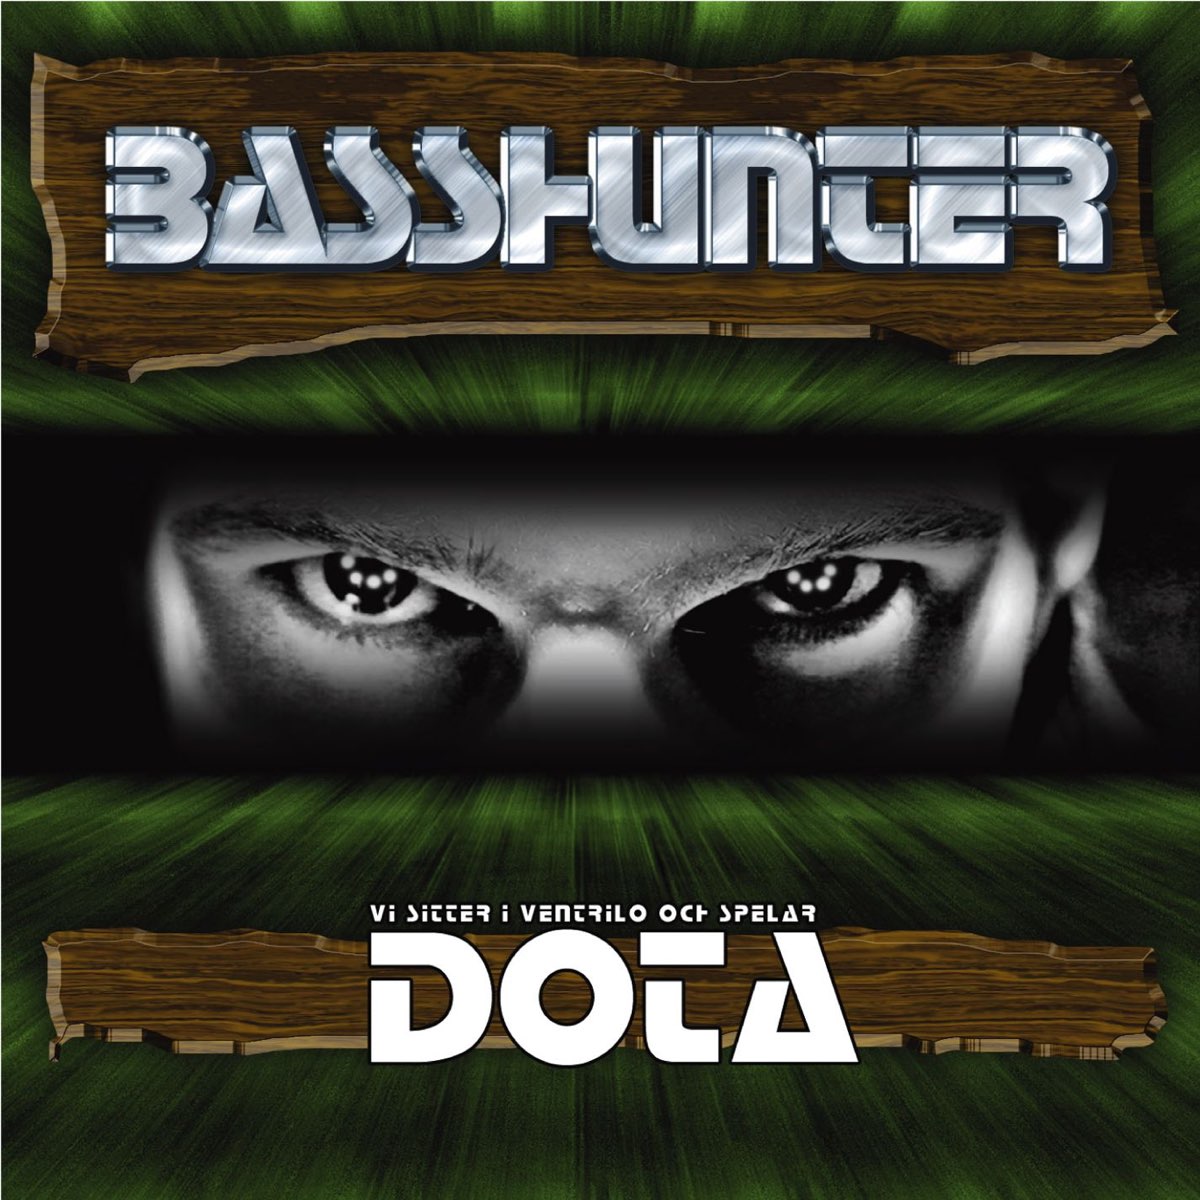 Dota radio edit. Basshunter Dota. Vi Sitter i Ventrilo och spelar Dota. Basshunter Dota 20. Vi Sitter i Ventrilo och spelar Dota (Extended Version).